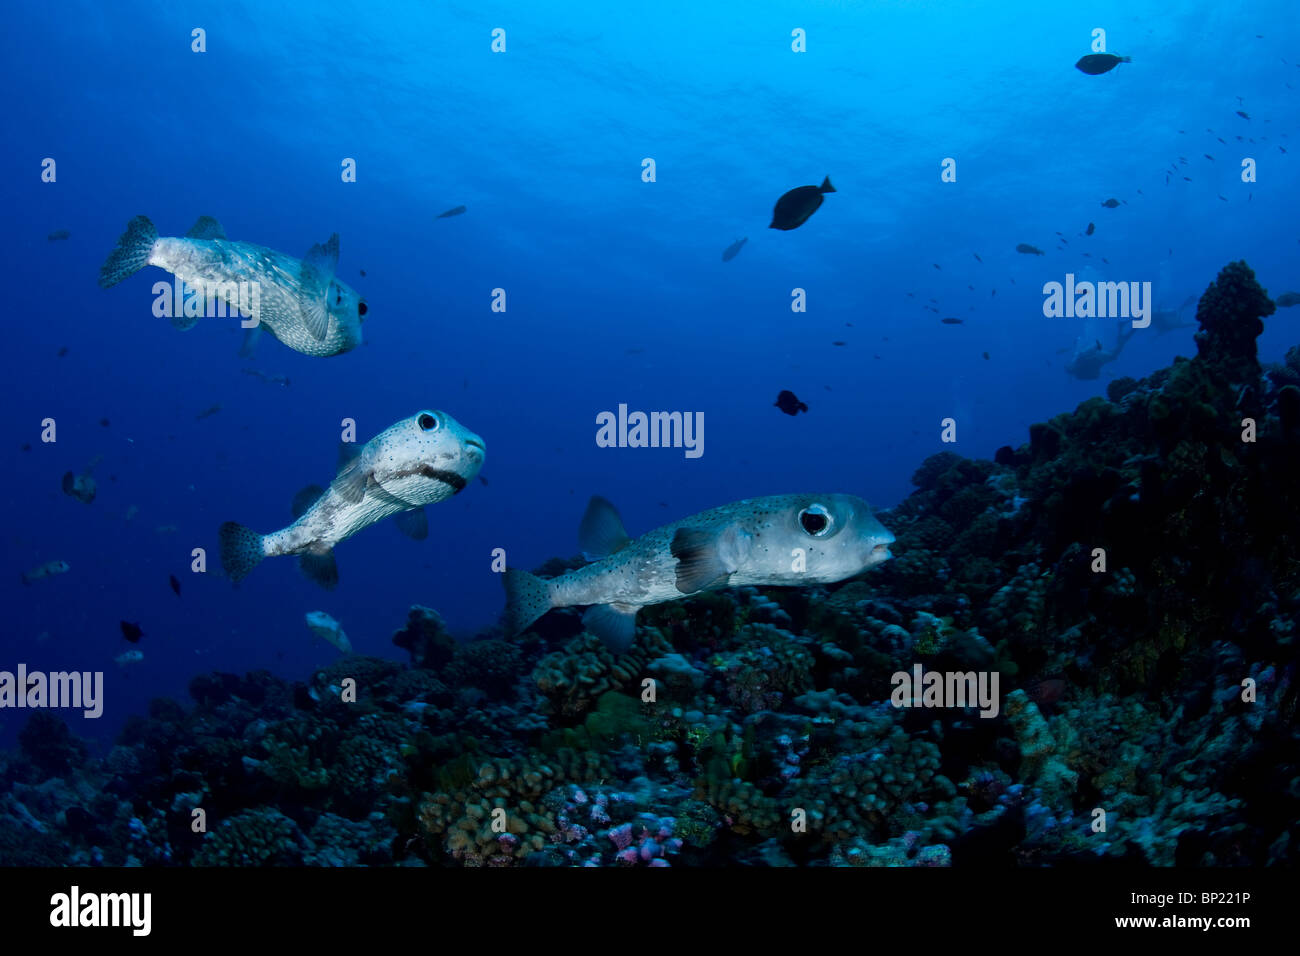 Pocupinefish over Reef, Diodon hystrix, Rangiroa, French Polynesia Stock Photo